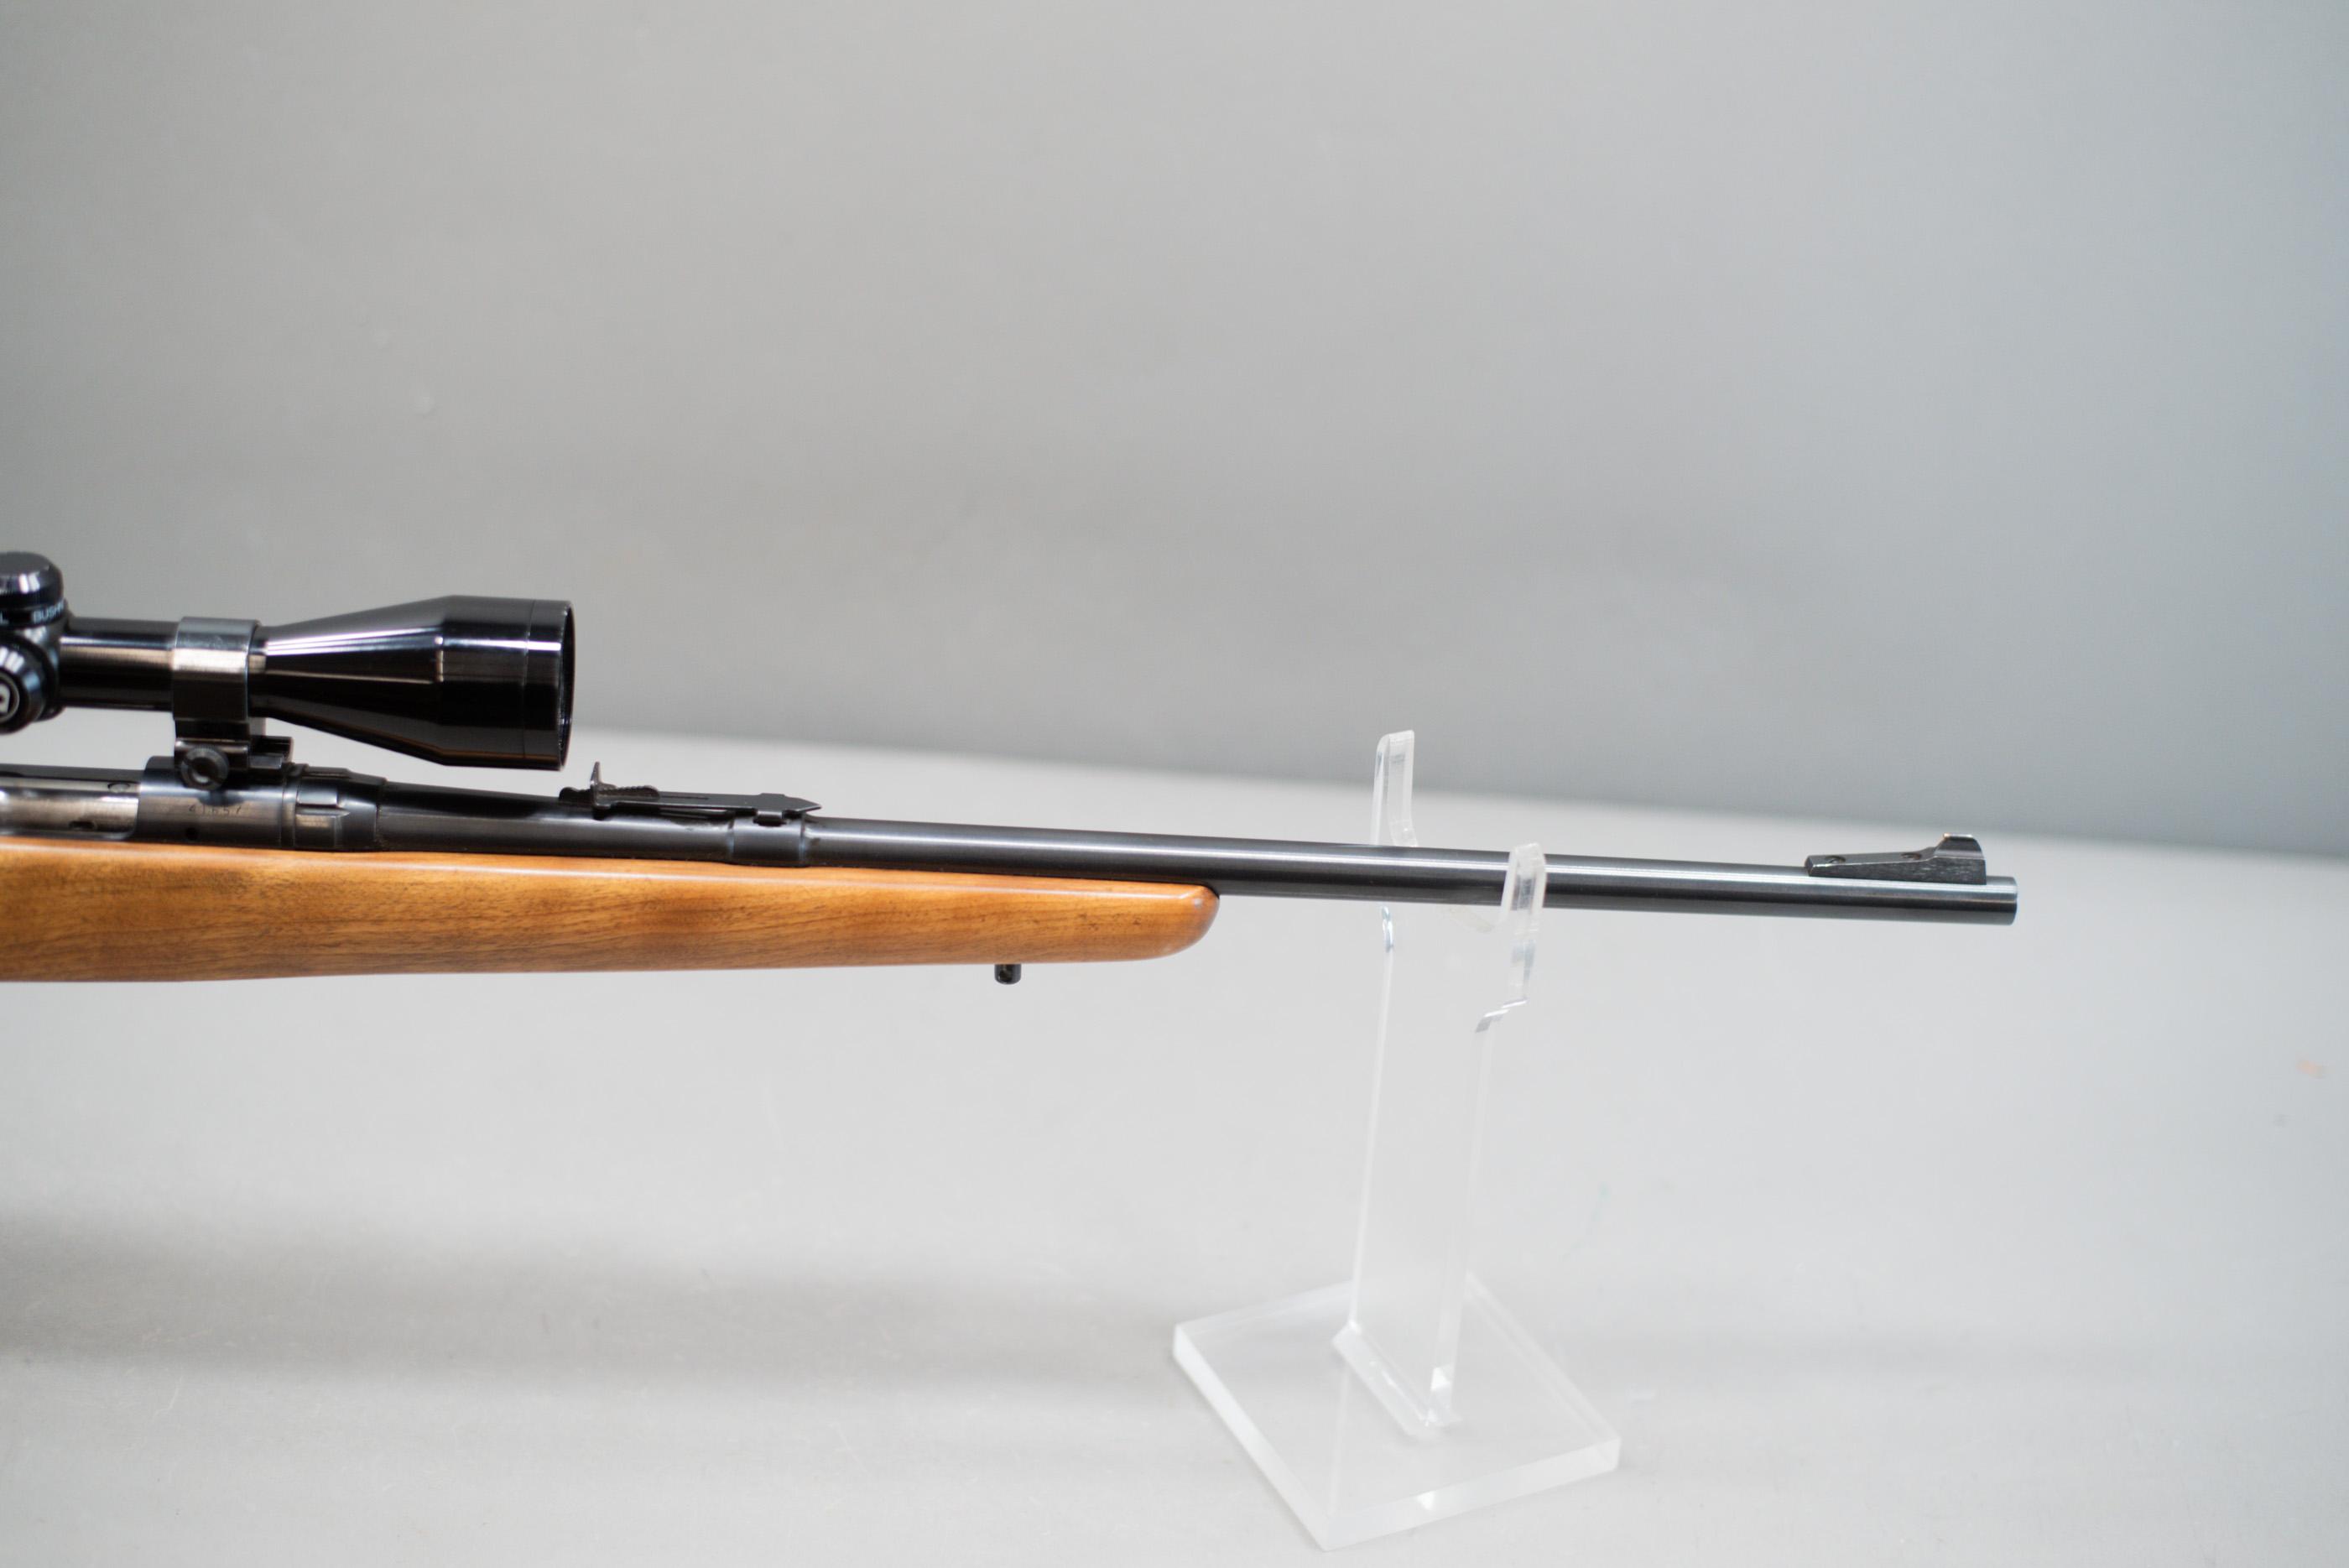 (R) Savage Model 110 30-06 Sprg Rifle